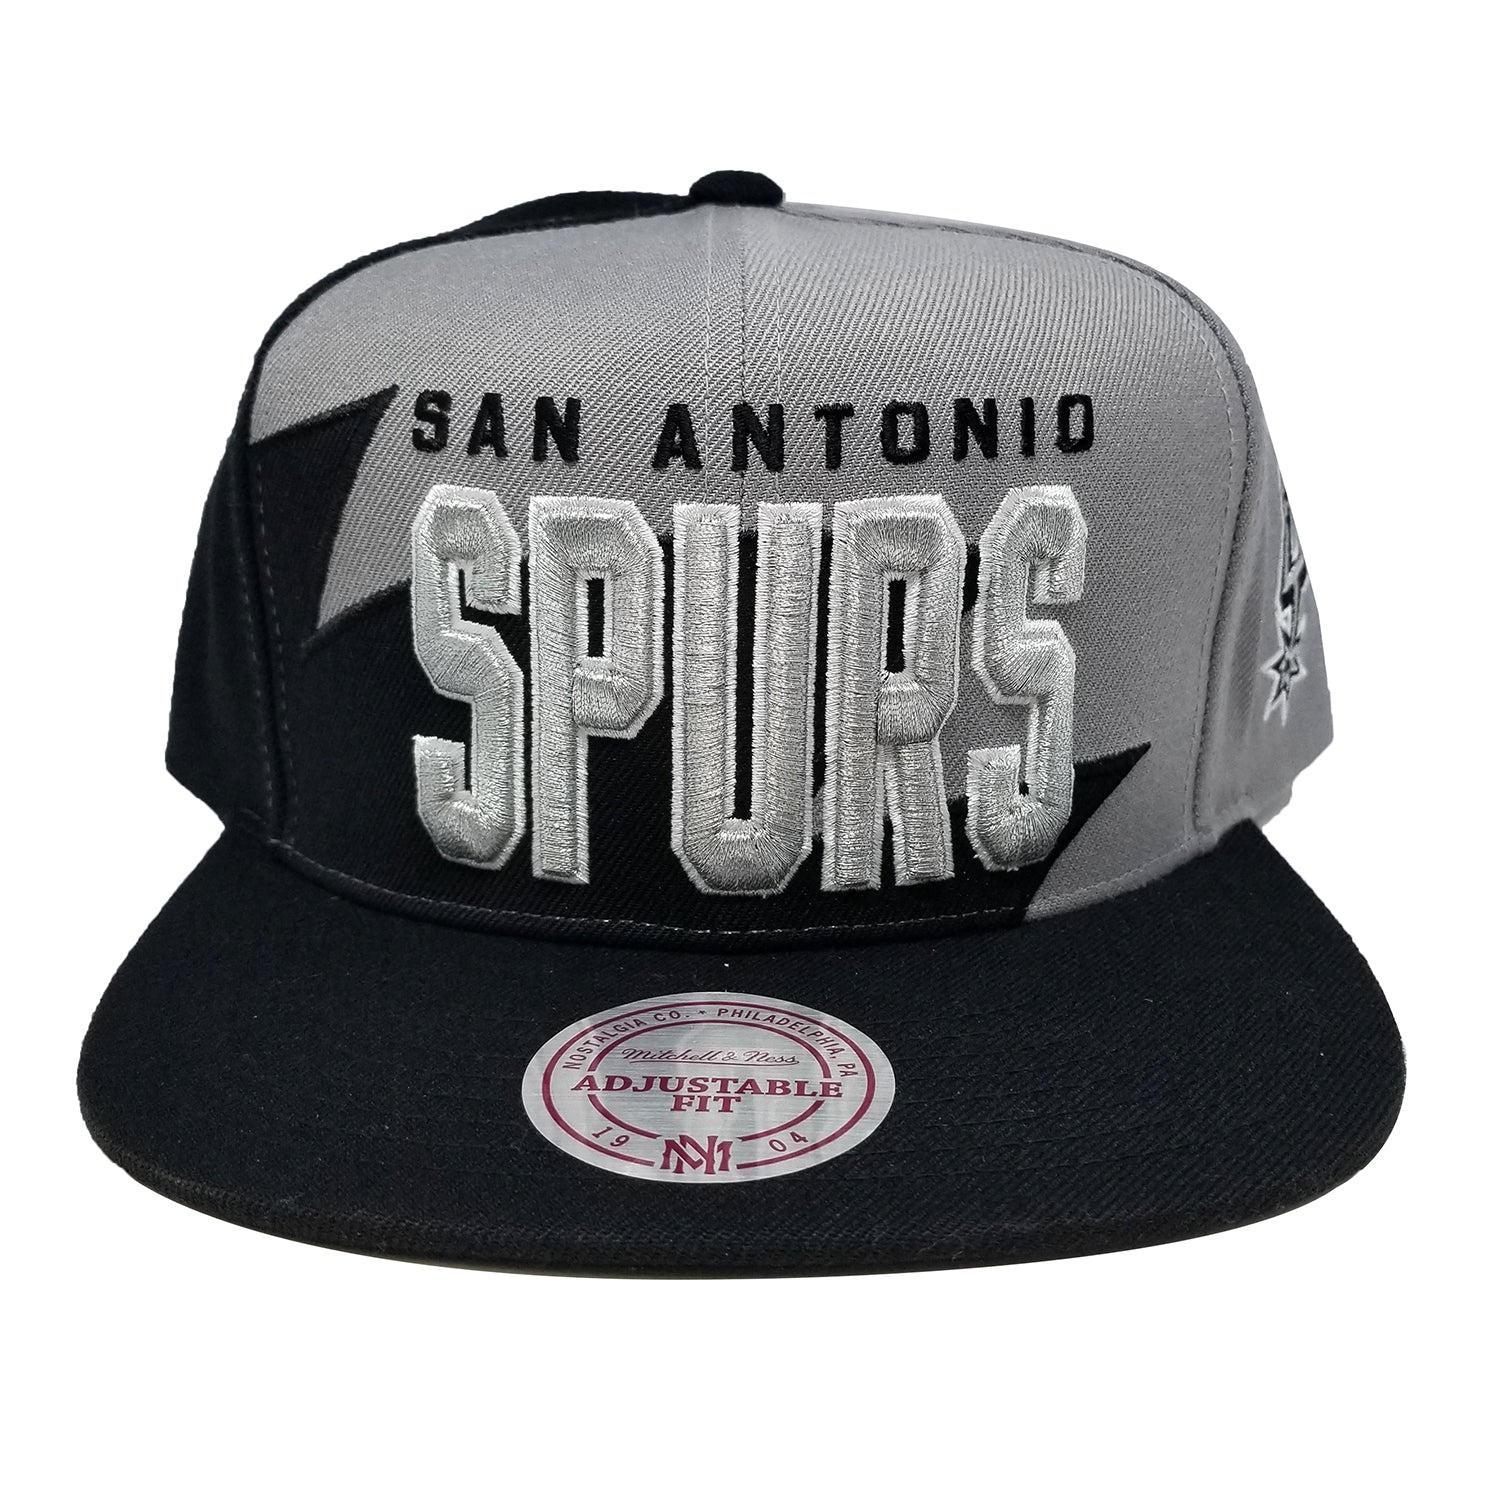 Mitchell & Ness 110 San Antonio Spurs snapback cap in black